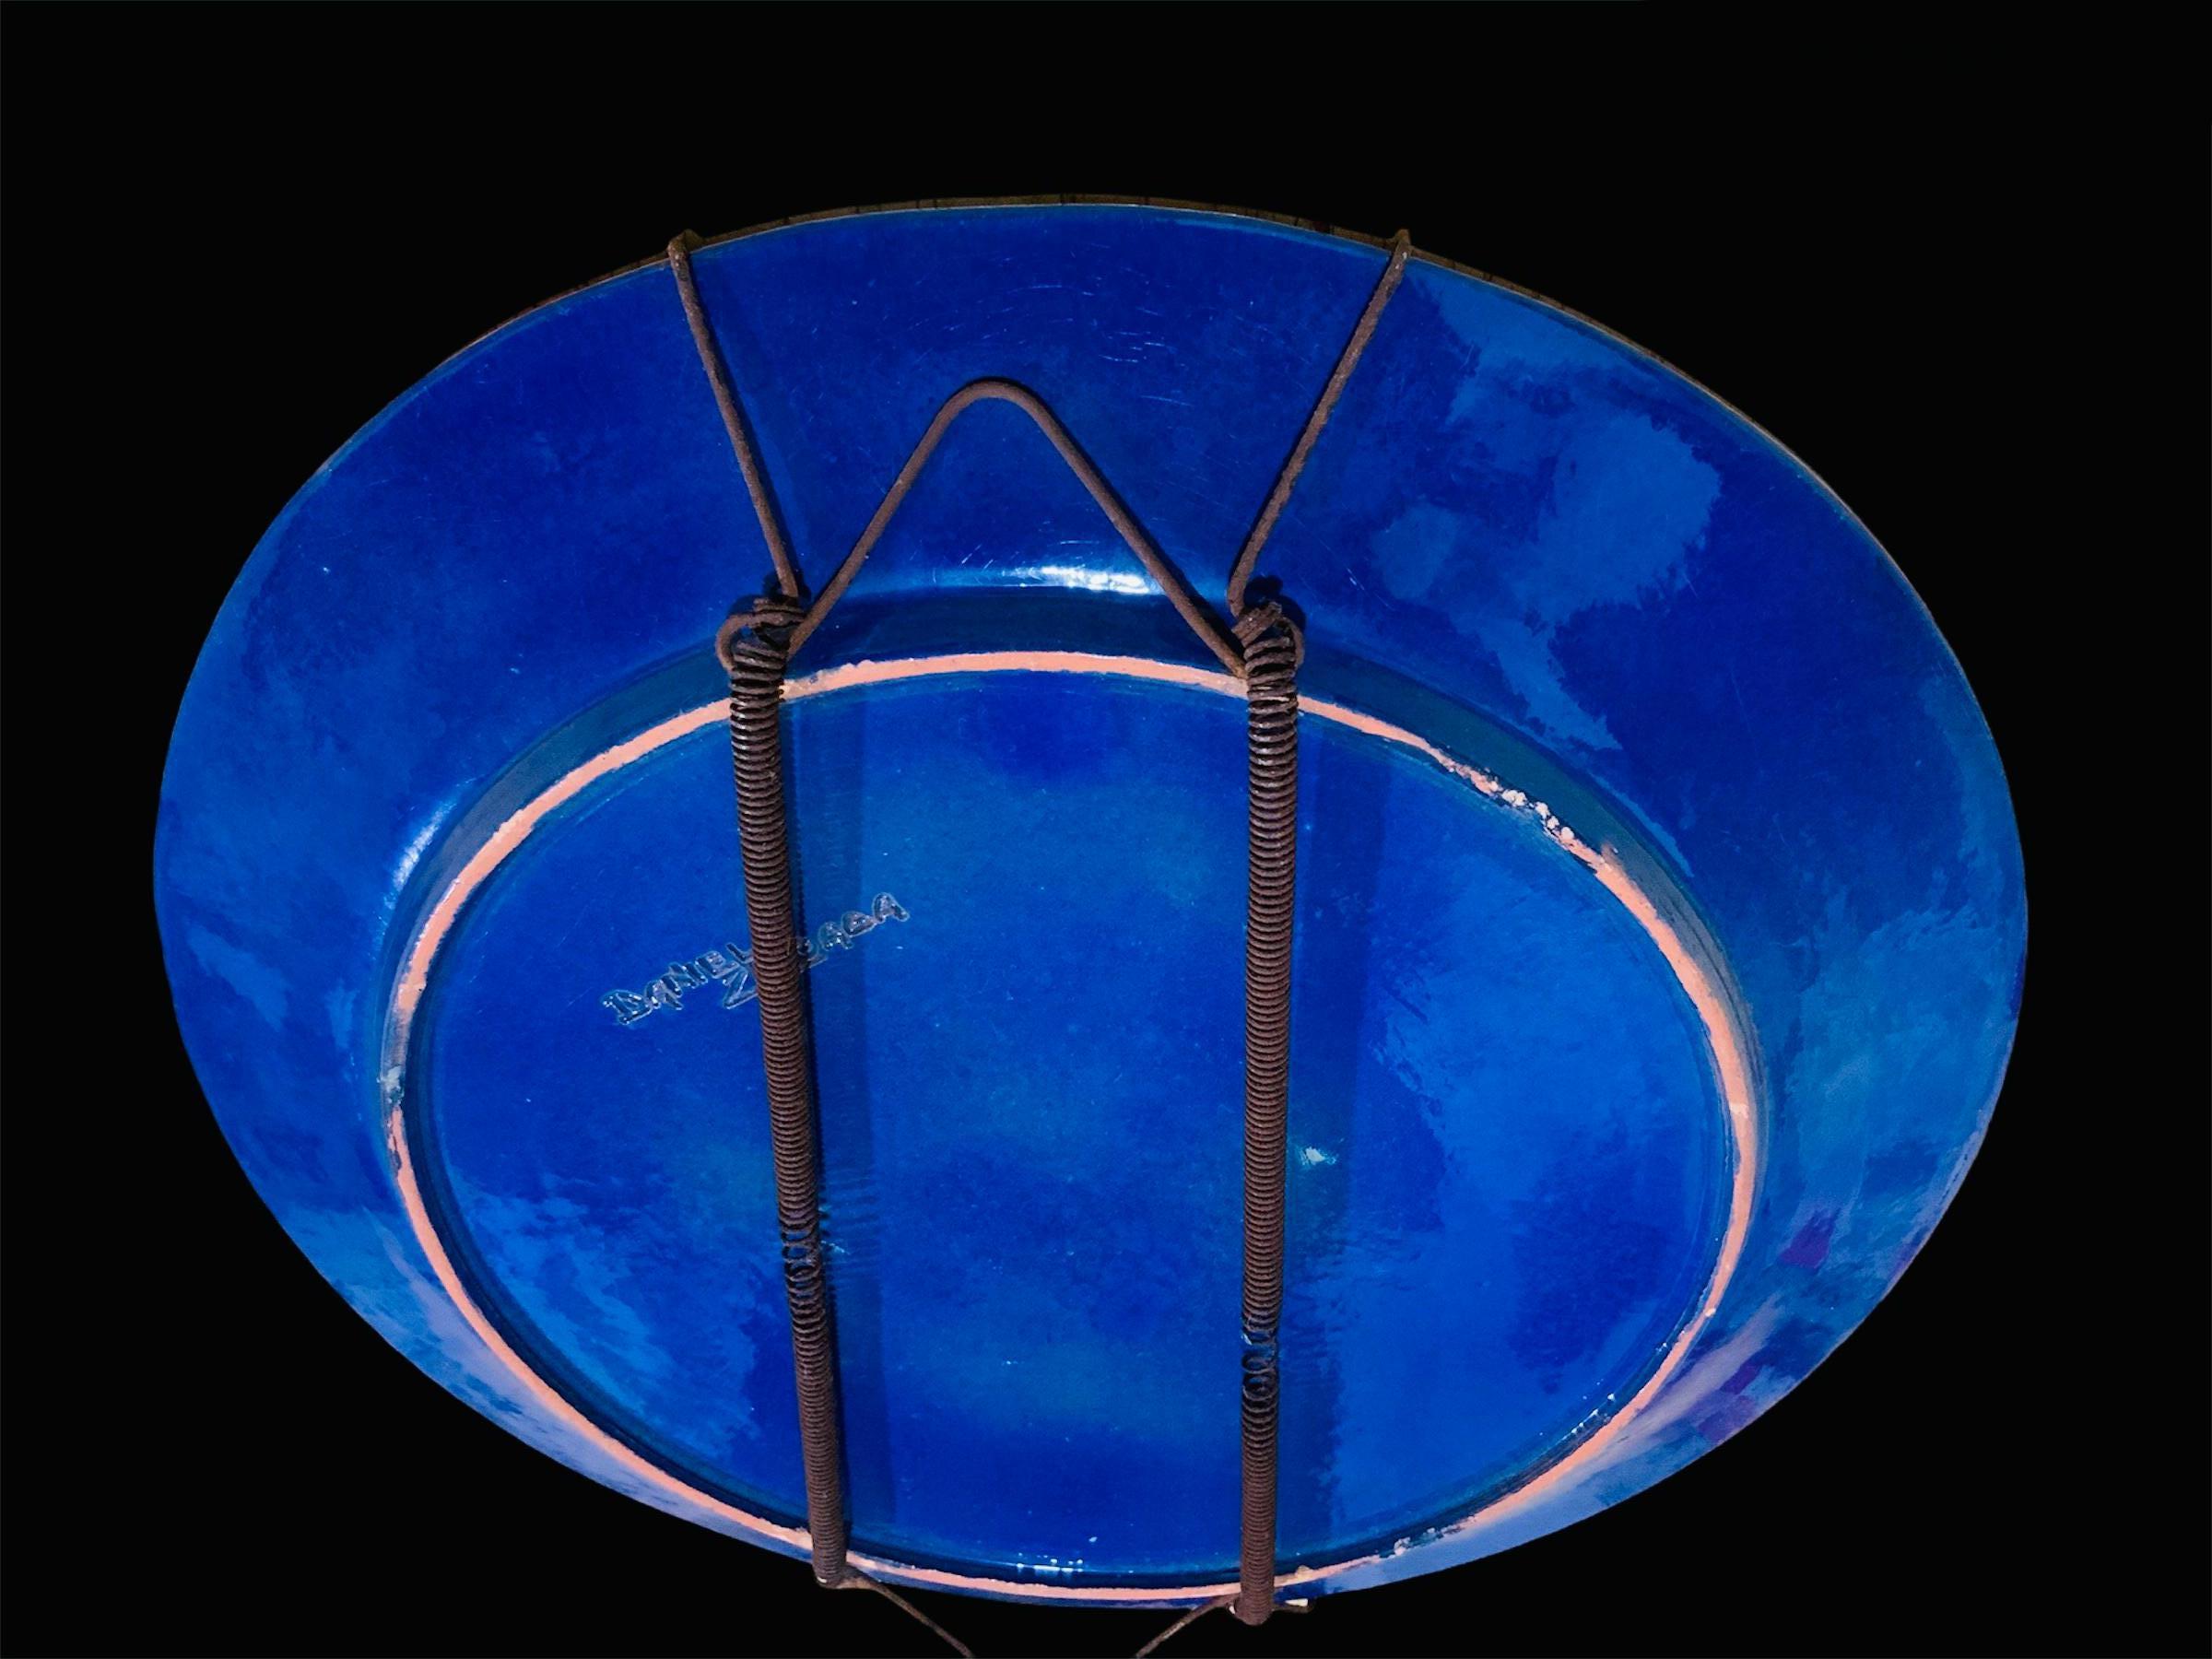 Daniel Zuloaga Boneta Hand Crafted Ceramic Plate In Good Condition For Sale In Guaynabo, PR